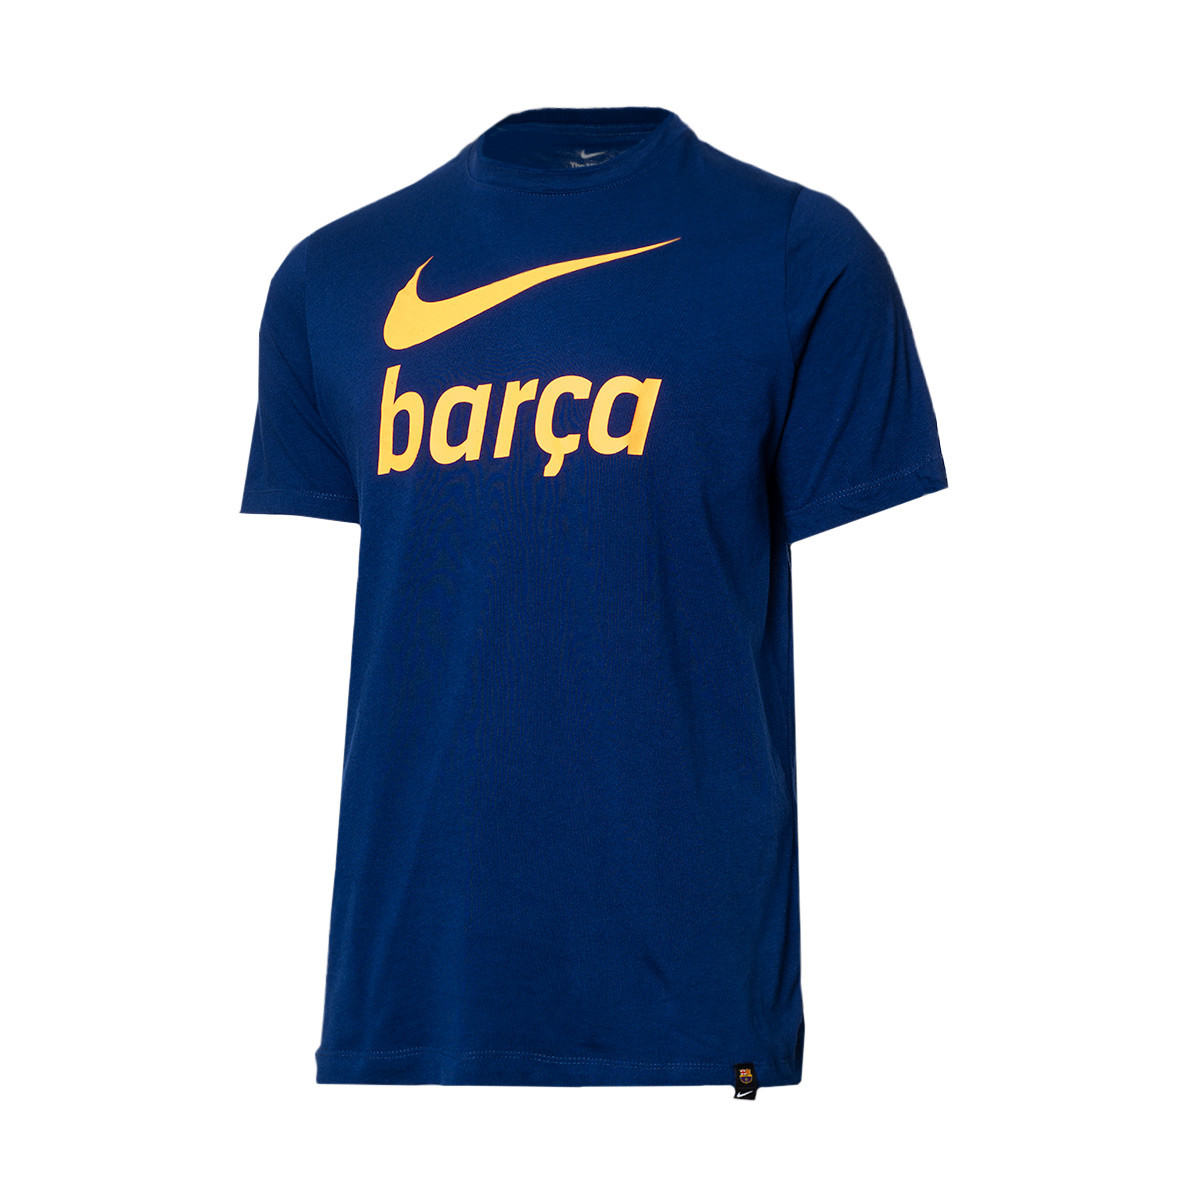 Nike FC Barcelona tričko tmavomodré pánske - SKLADOM